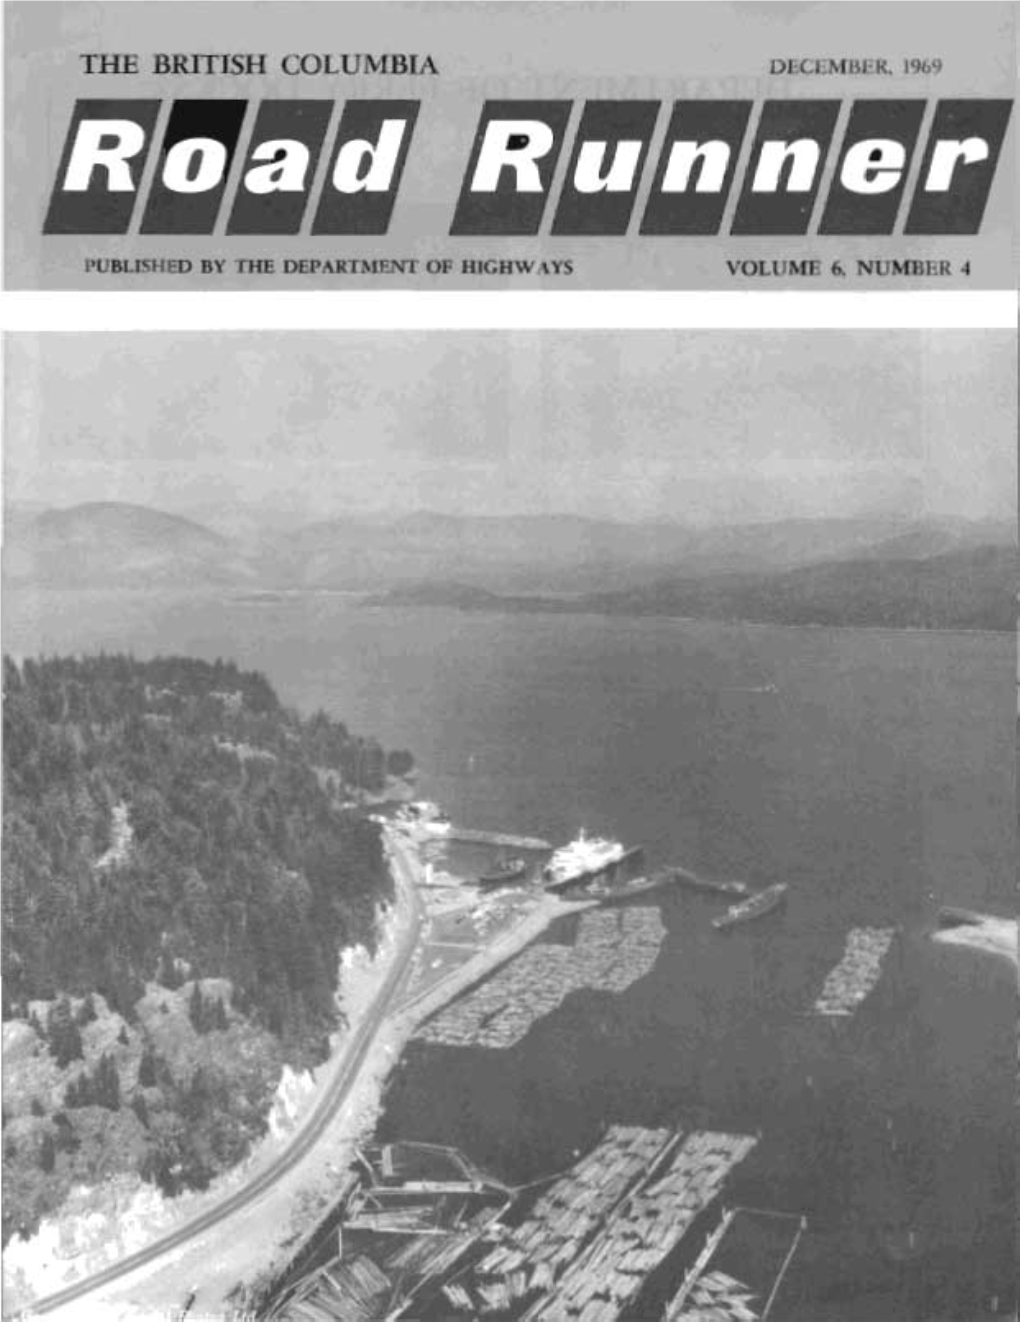 The British Columbia Road Runner, December 1969, Volume 6, Number 4